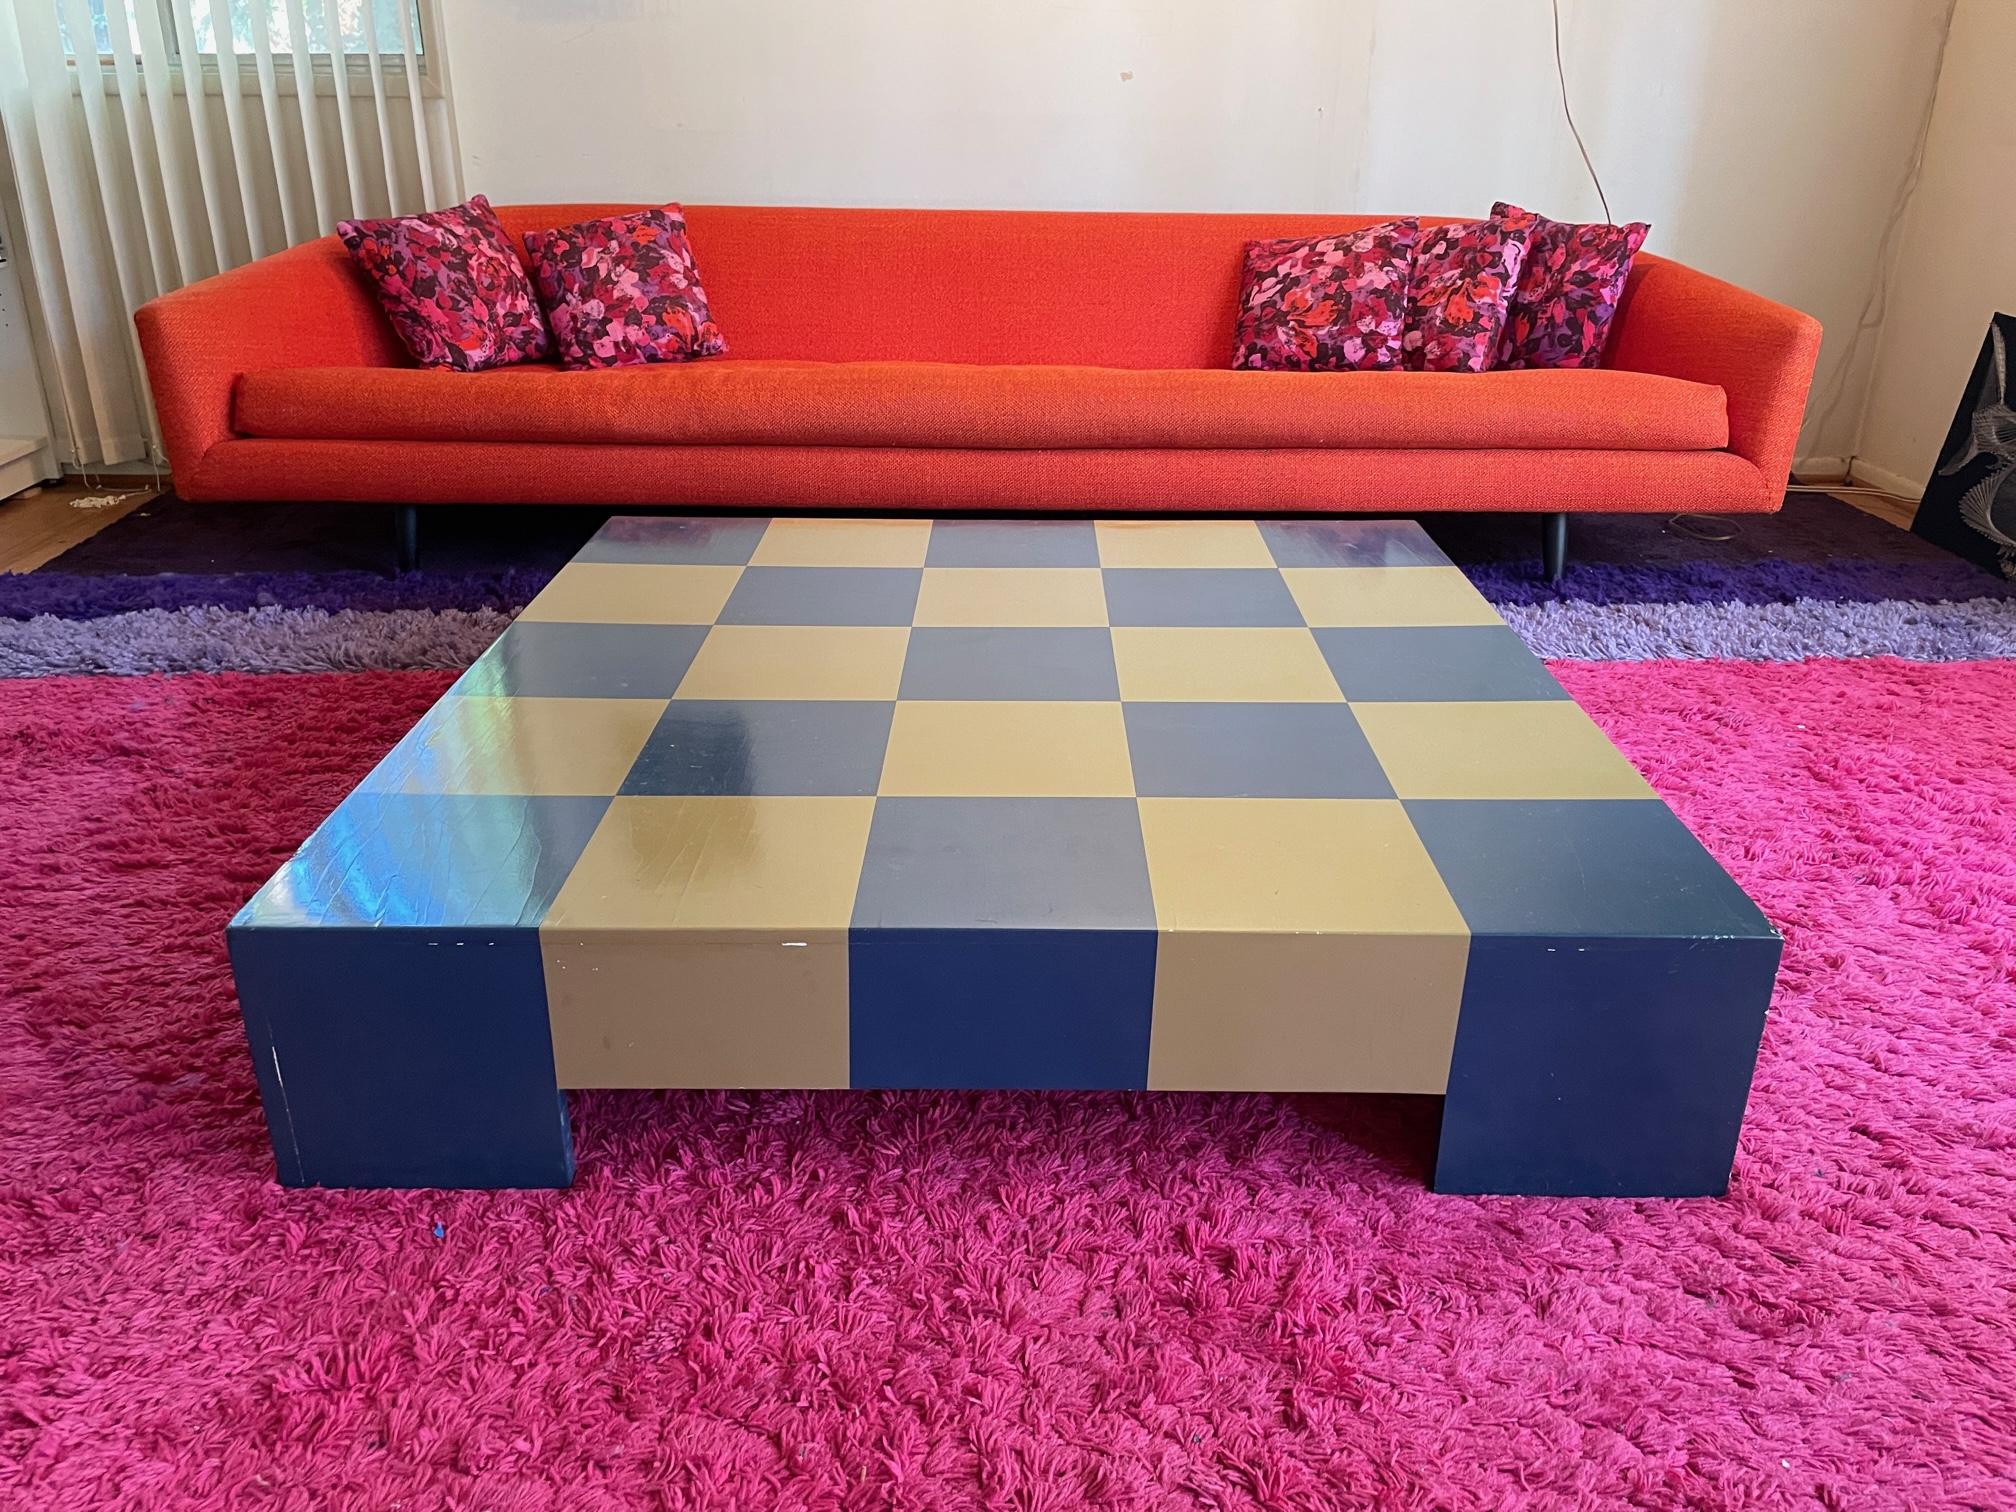 giant lego coffee table